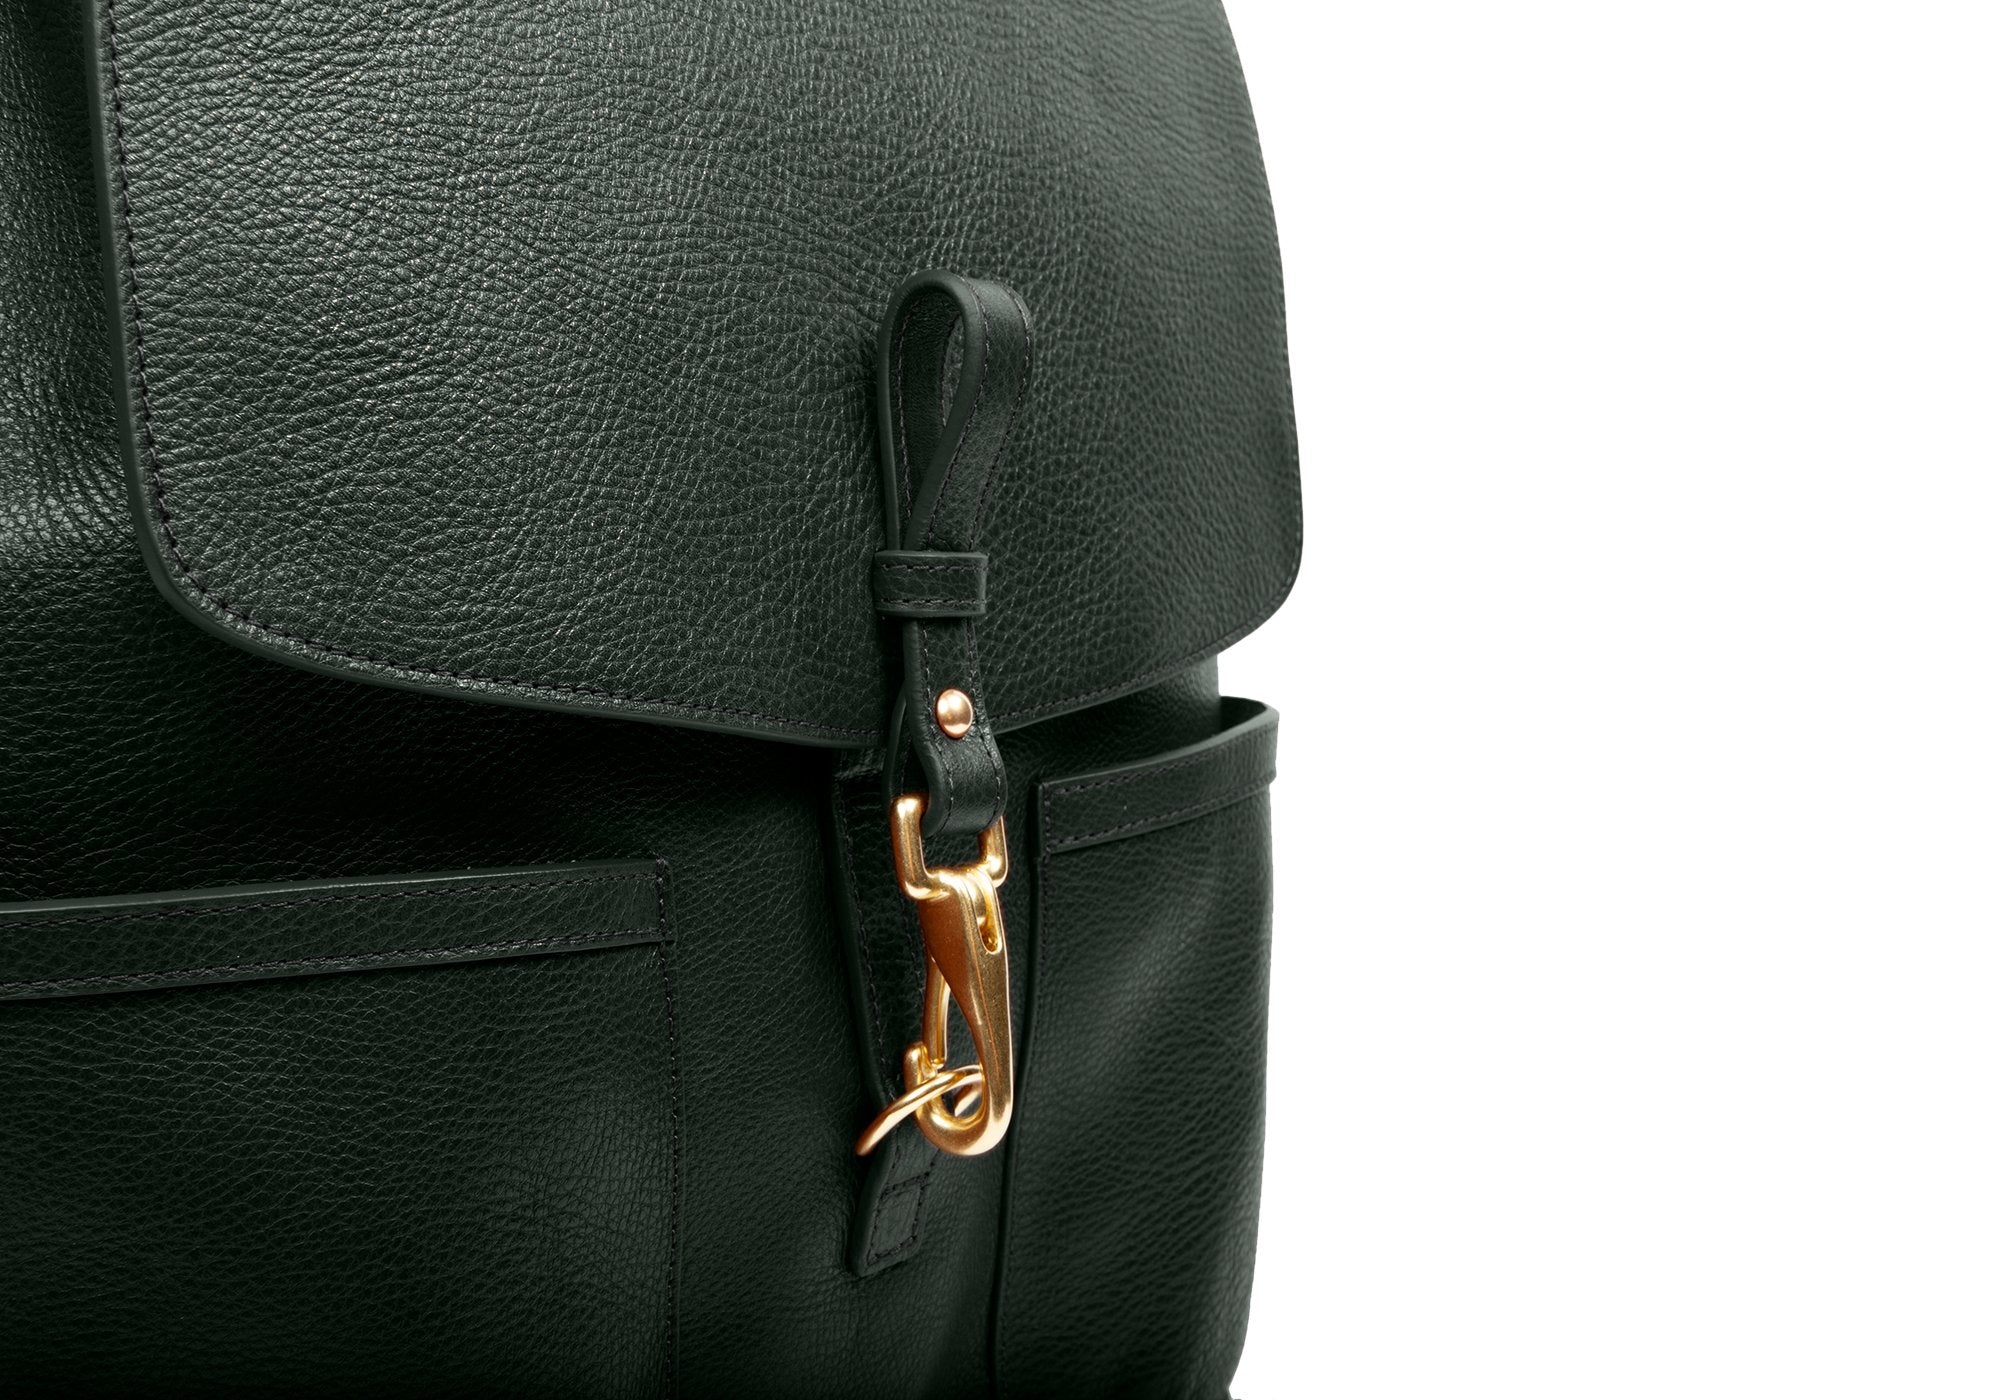 Leather Knapsack - Handmade Leather Bag